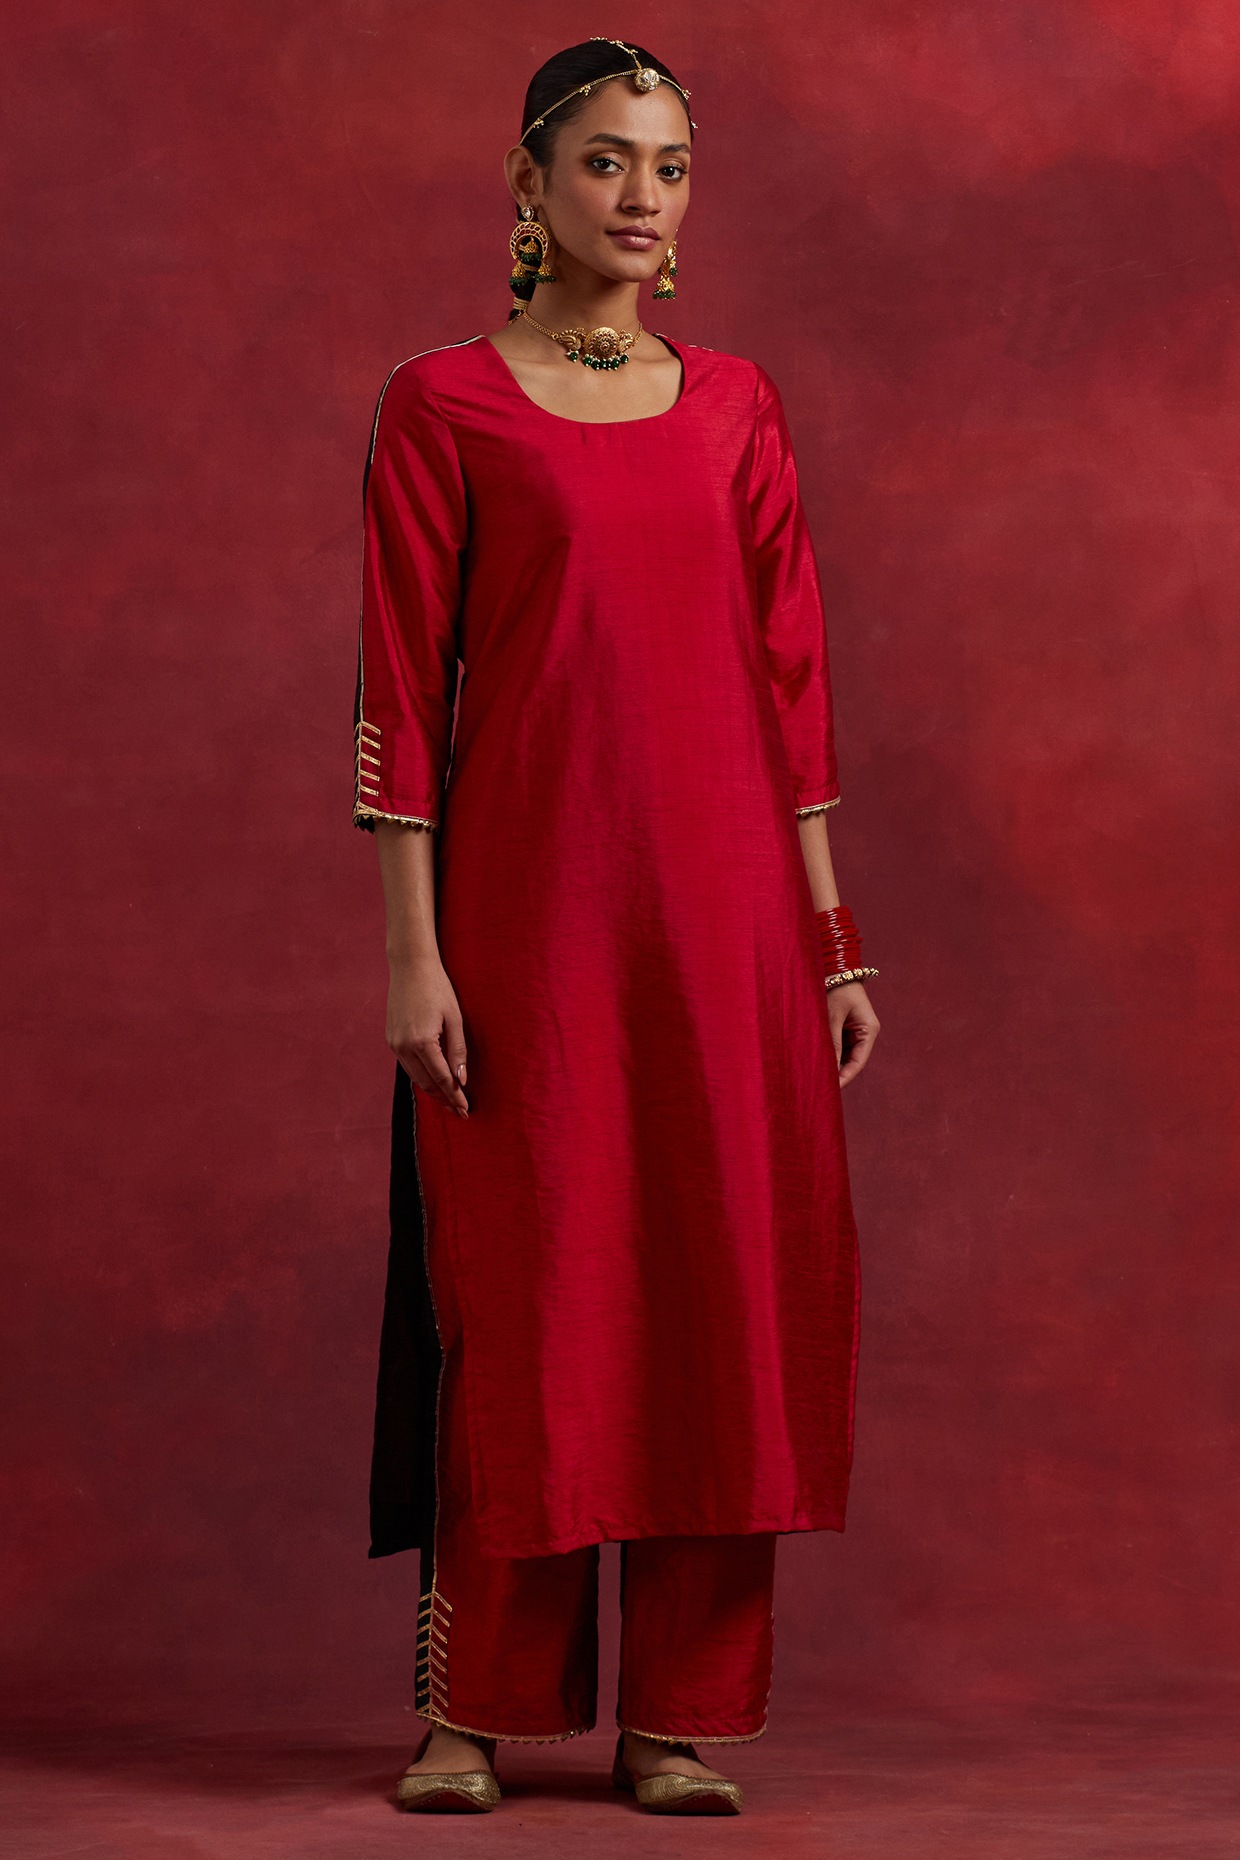 Shop Indian Anarkali Suits Online in Dubai - (UAE) | Dial N Fashion